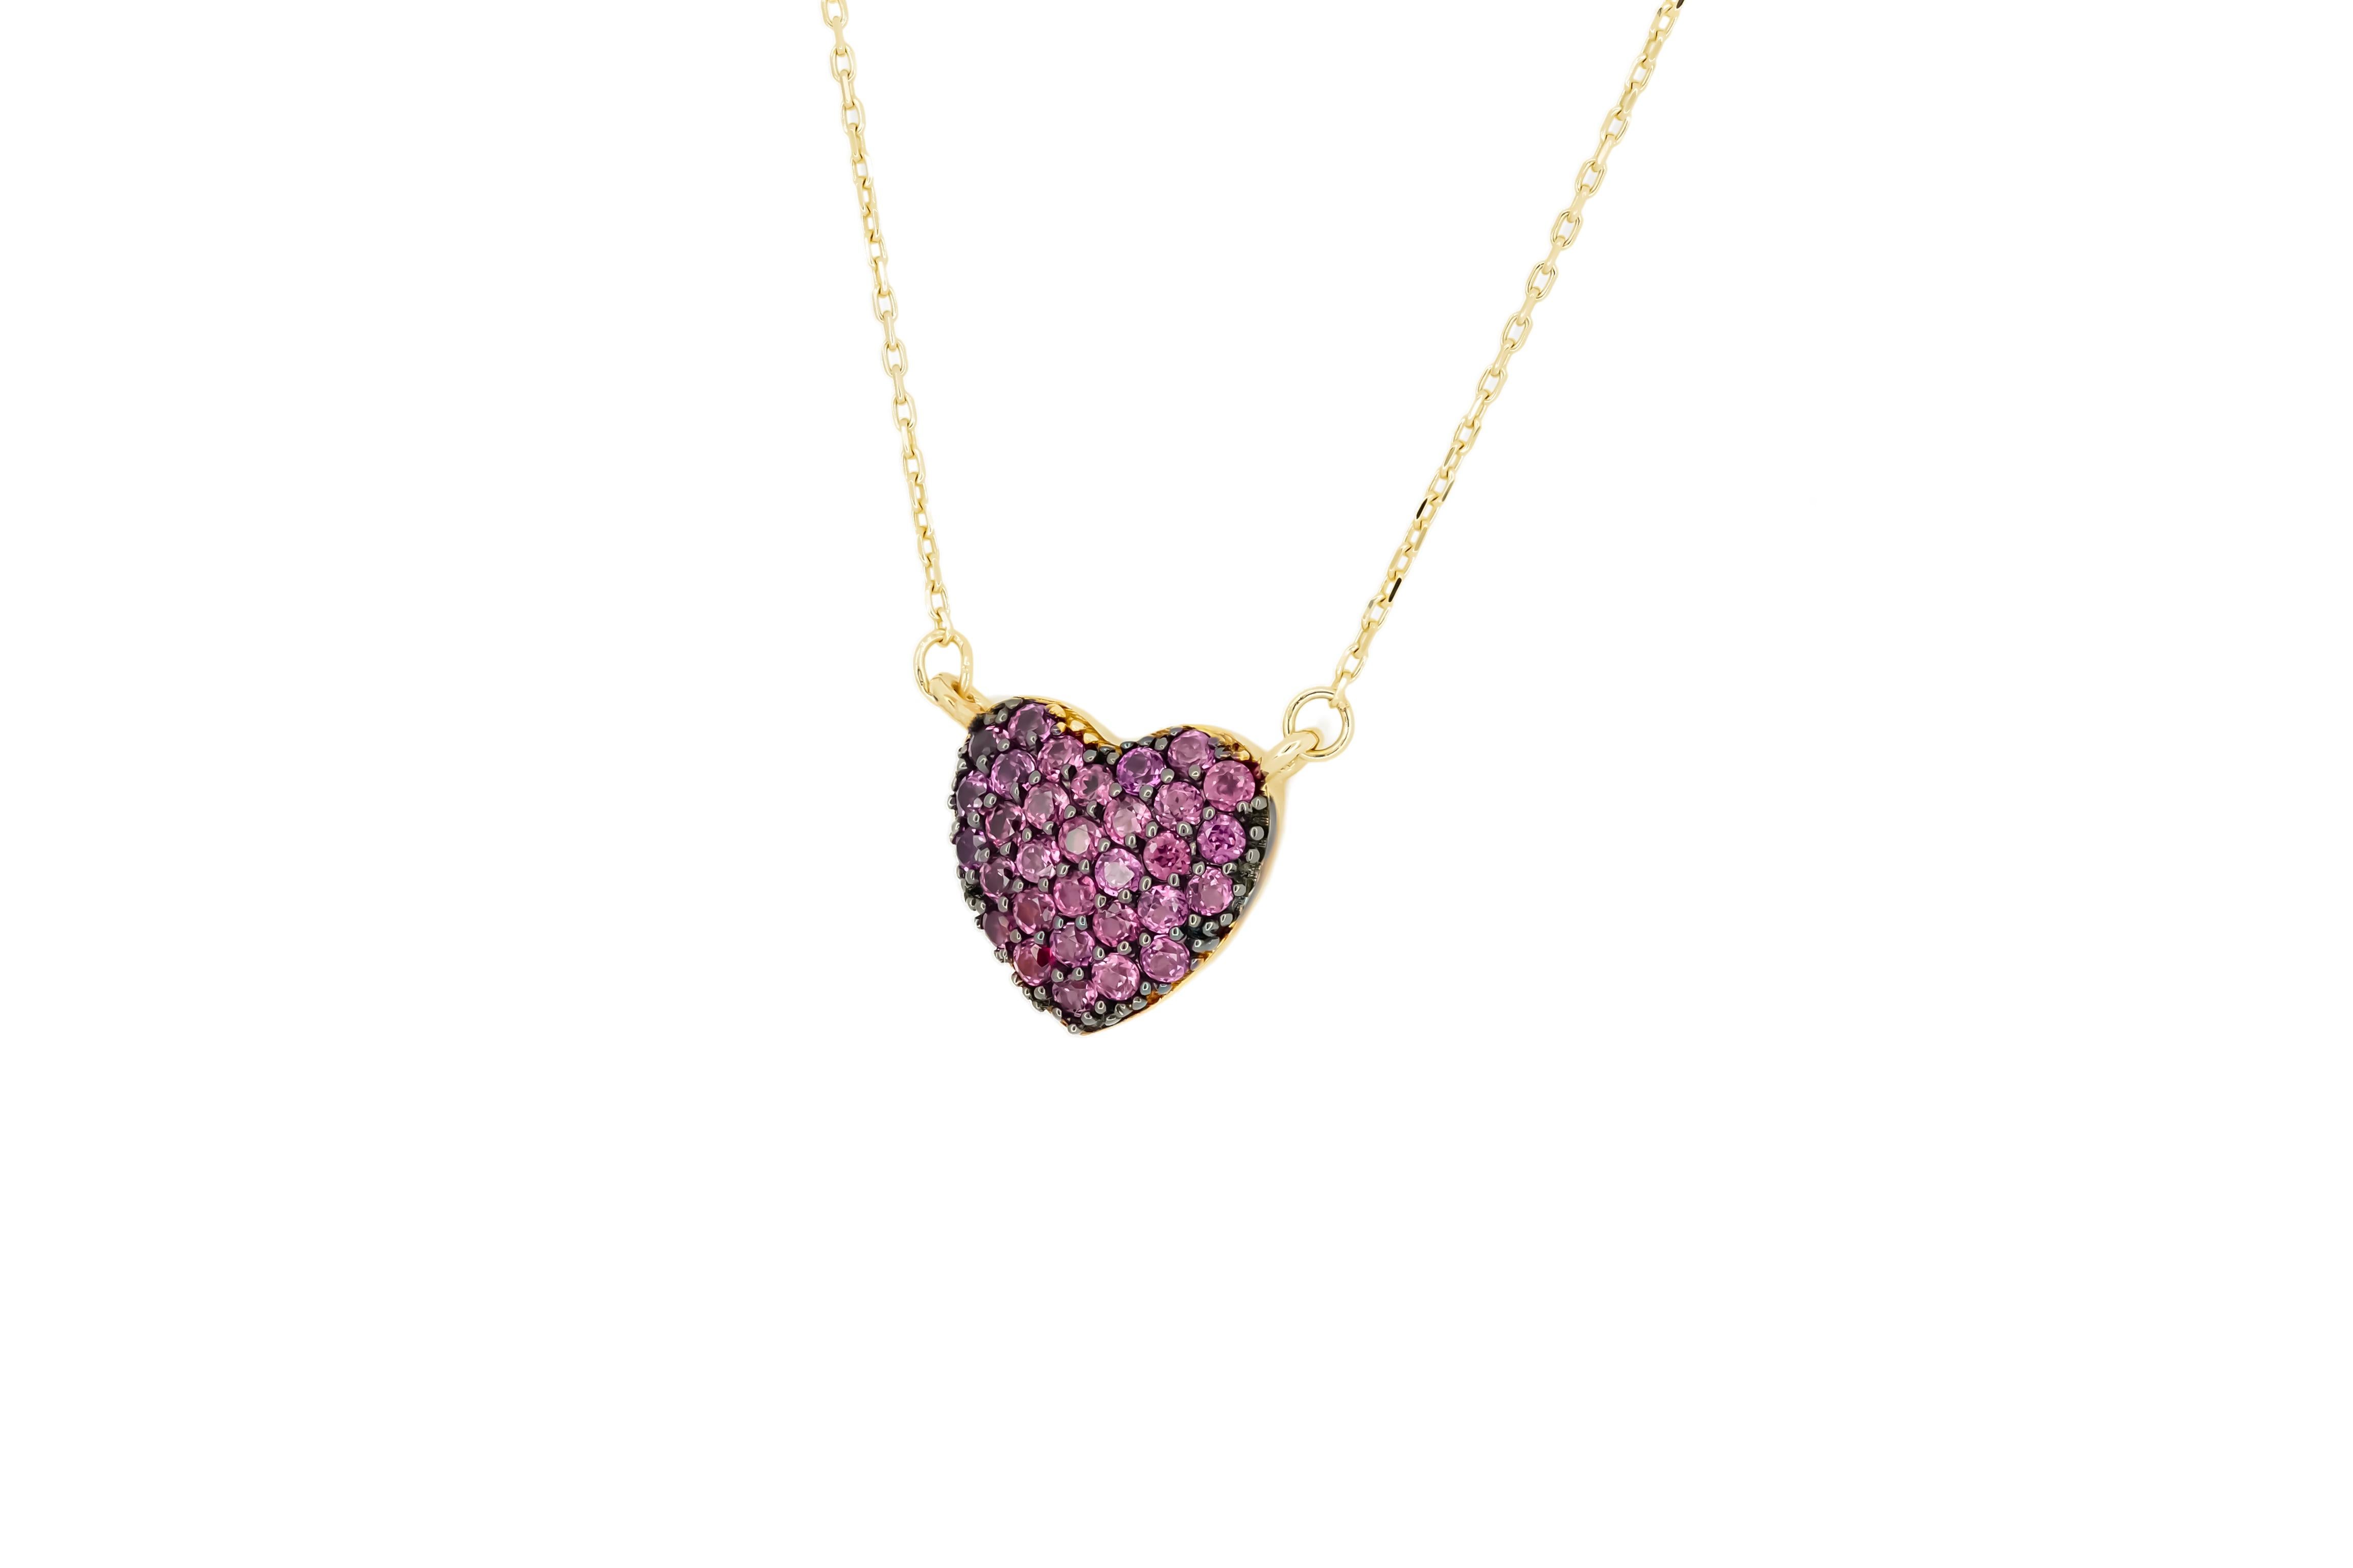 Women's Heart Pendant necklace in 14k gold 